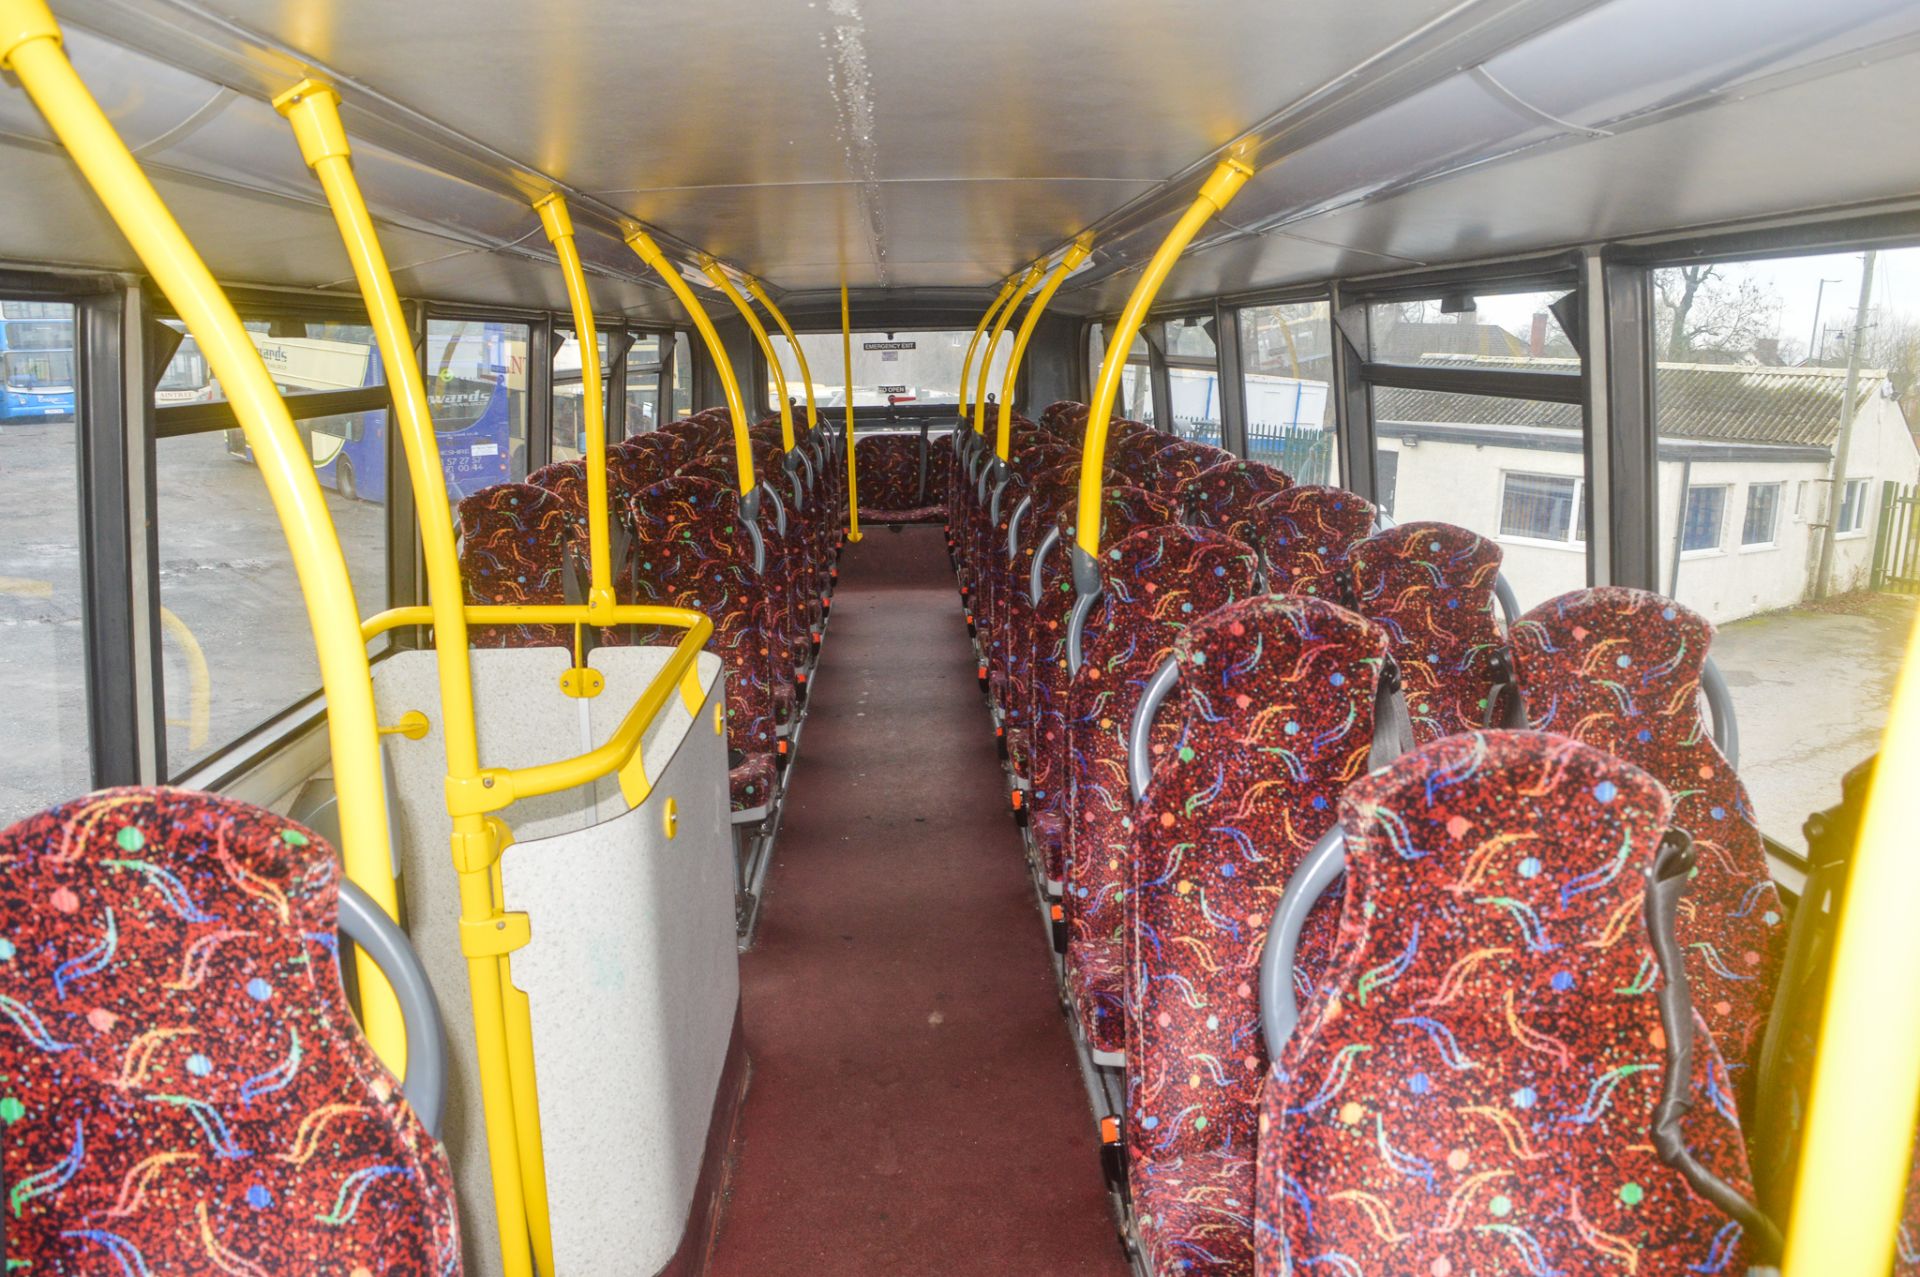 Alexander Dennis Trident 2 Enviro 400 81 seat double deck service bus Registration Number: SN58 - Image 9 of 12